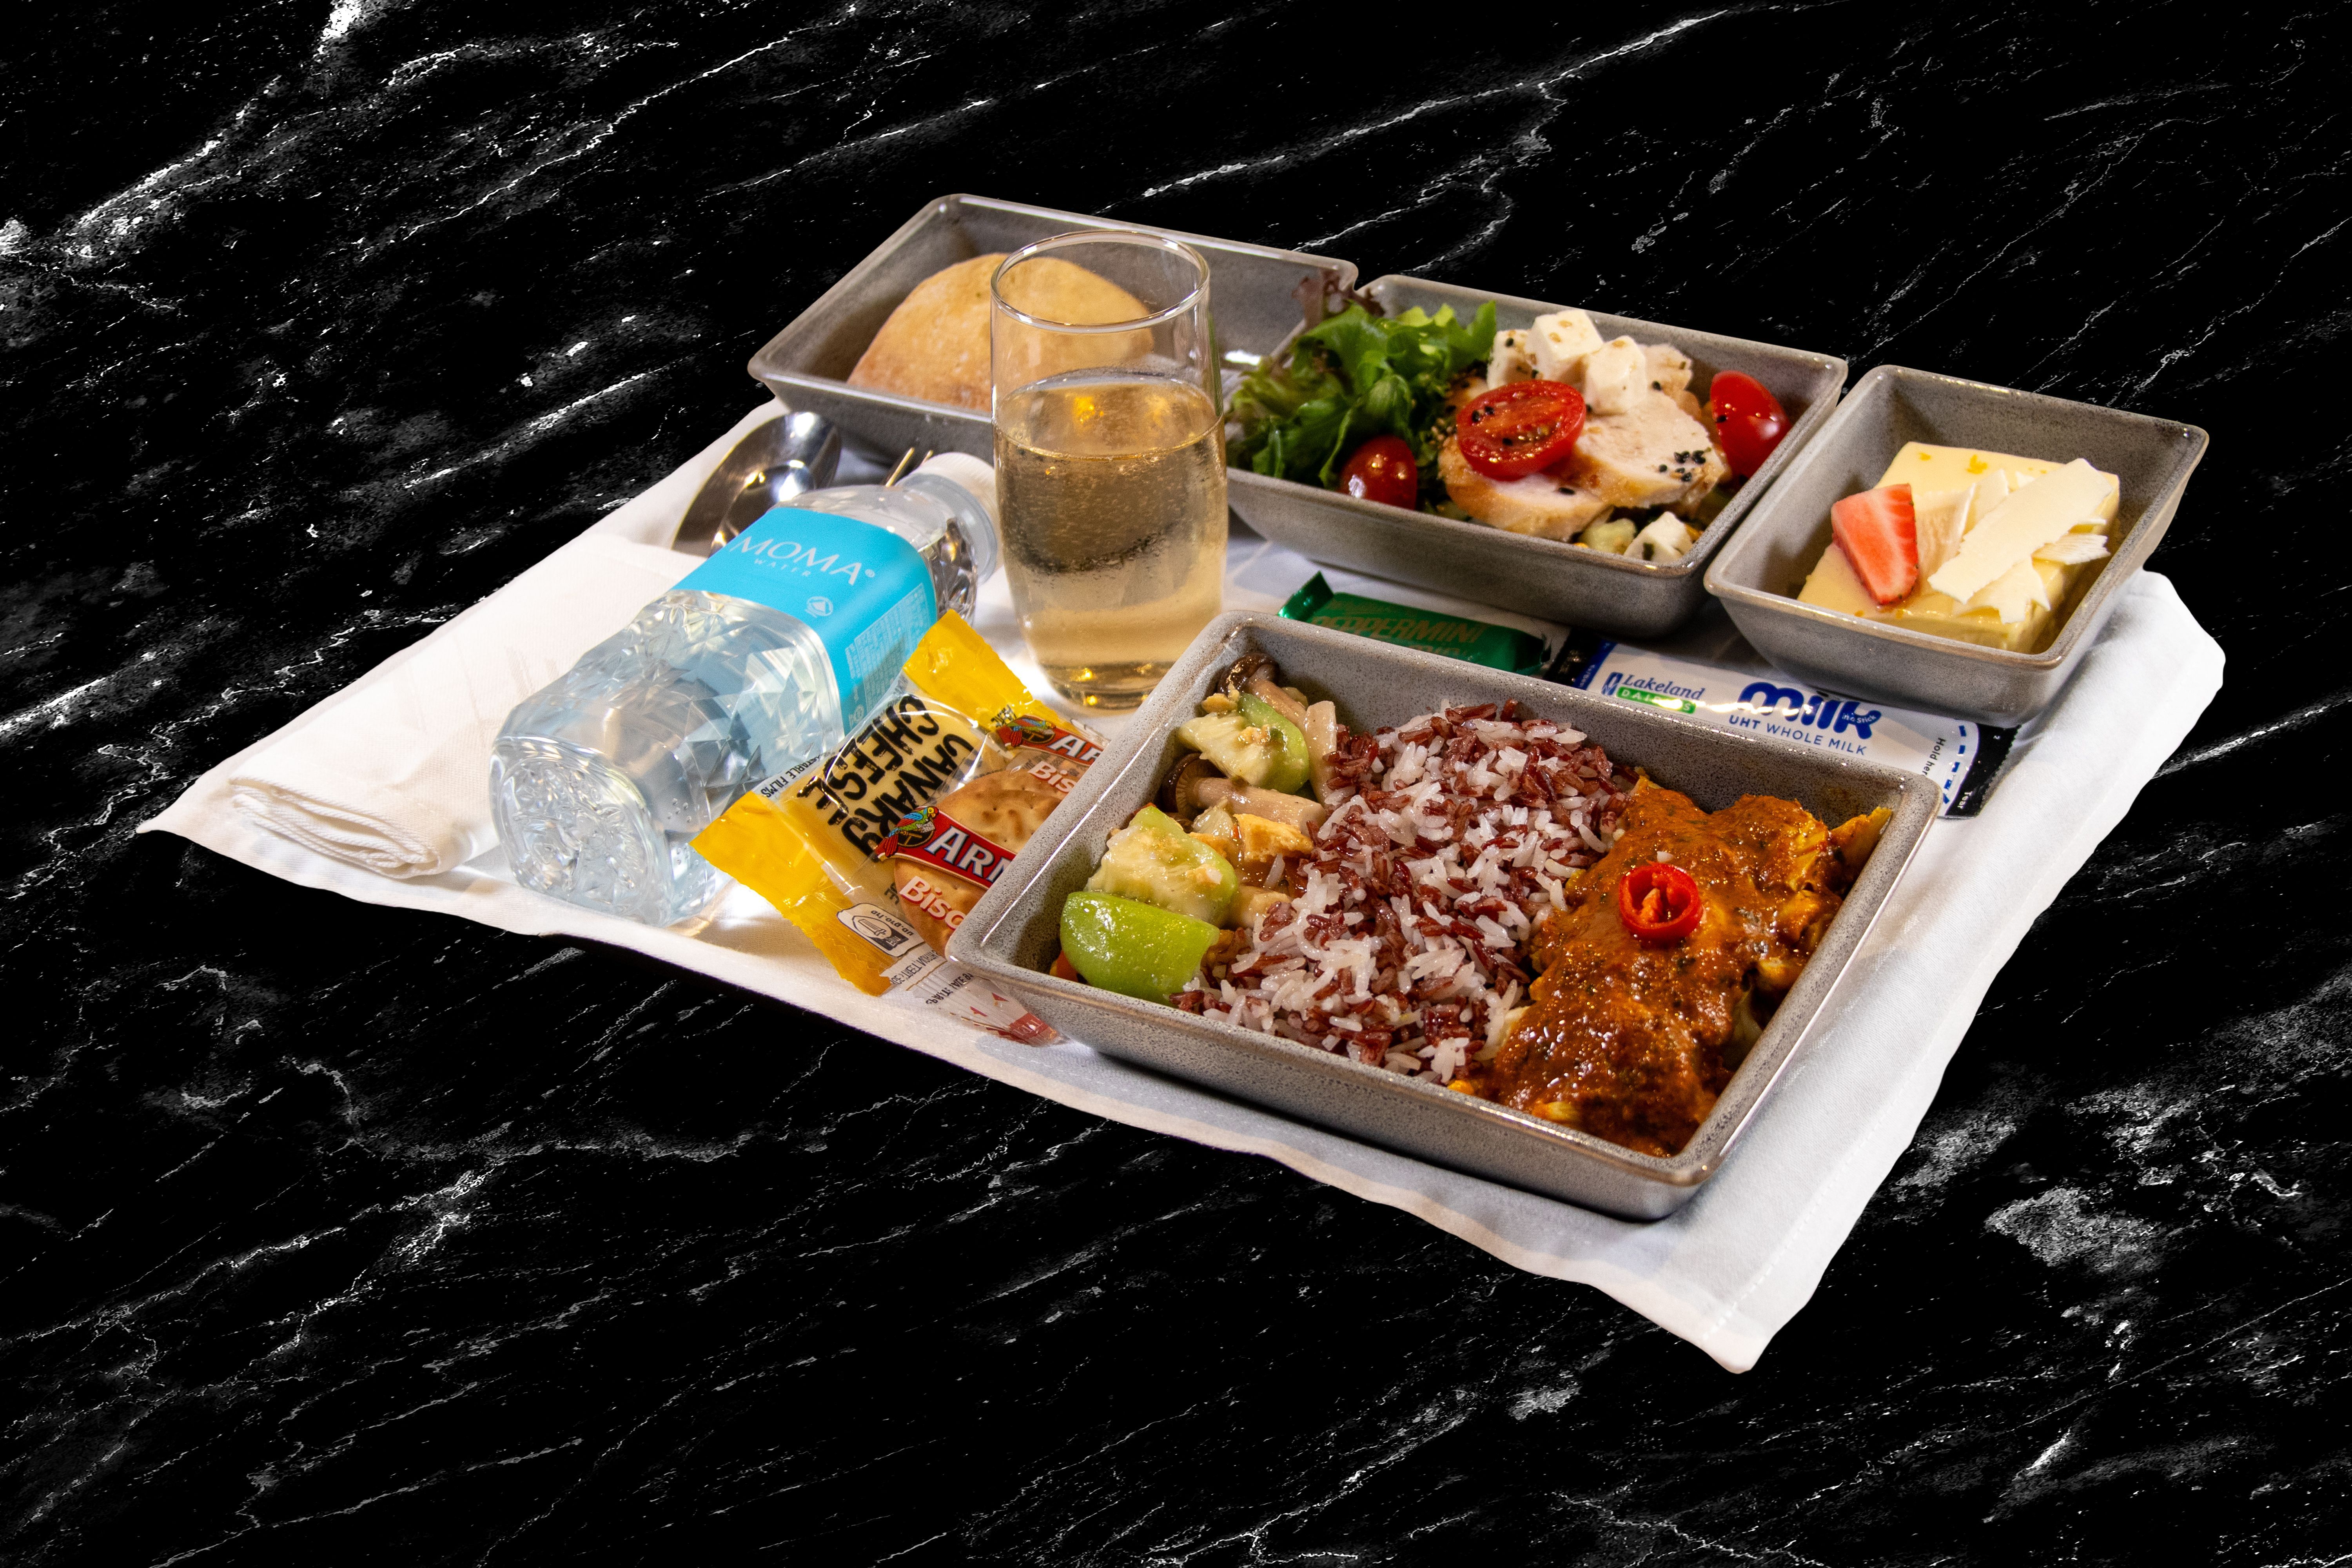 Singapore Airlines new Premium Economy in-flight meal